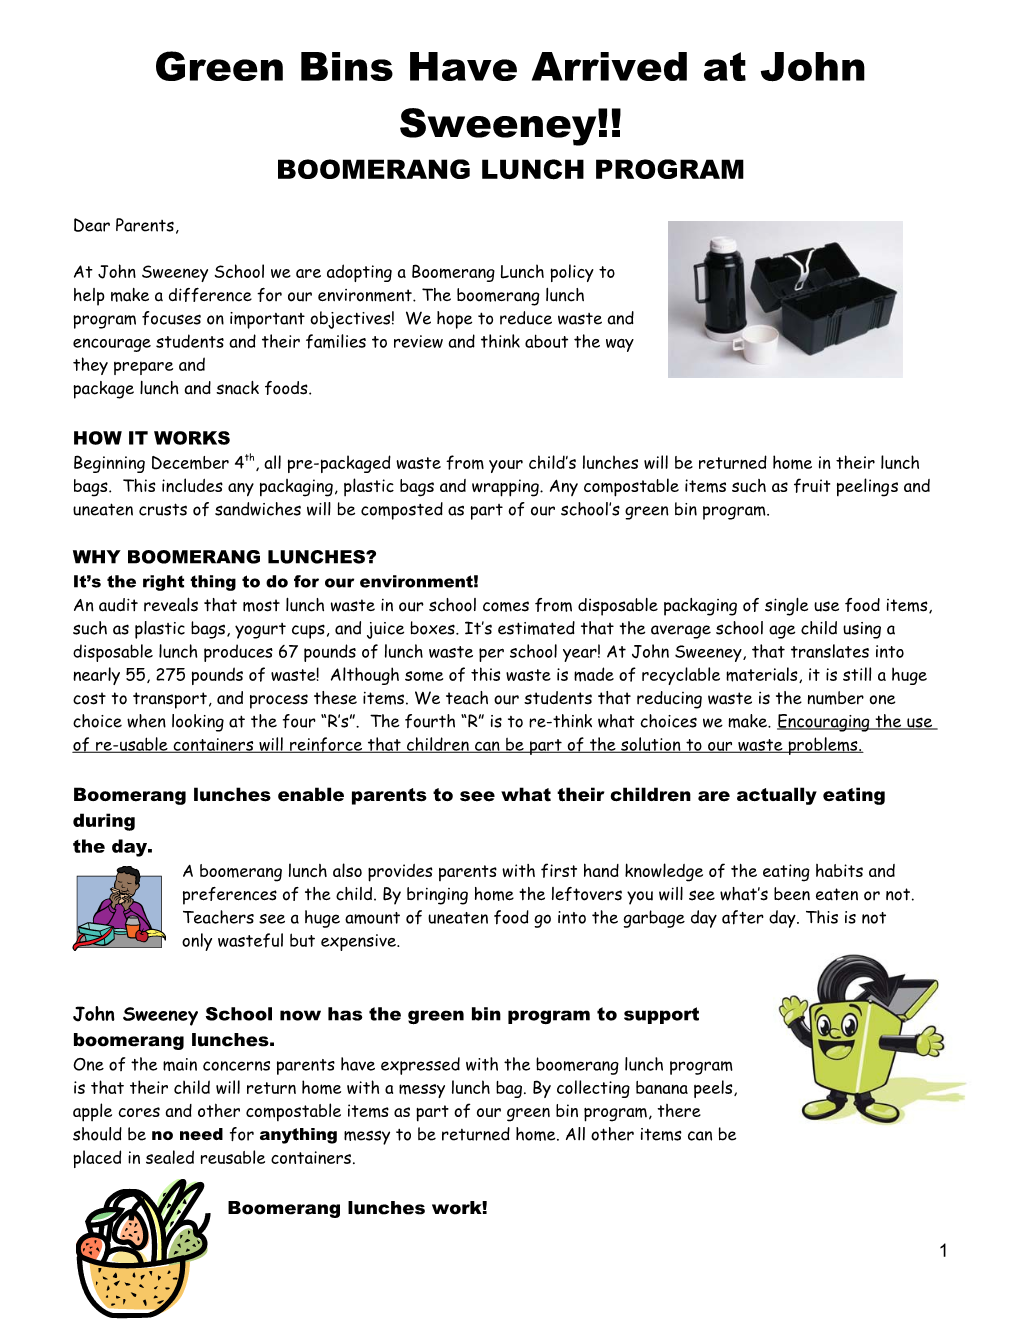 Boomerang Lunch Program